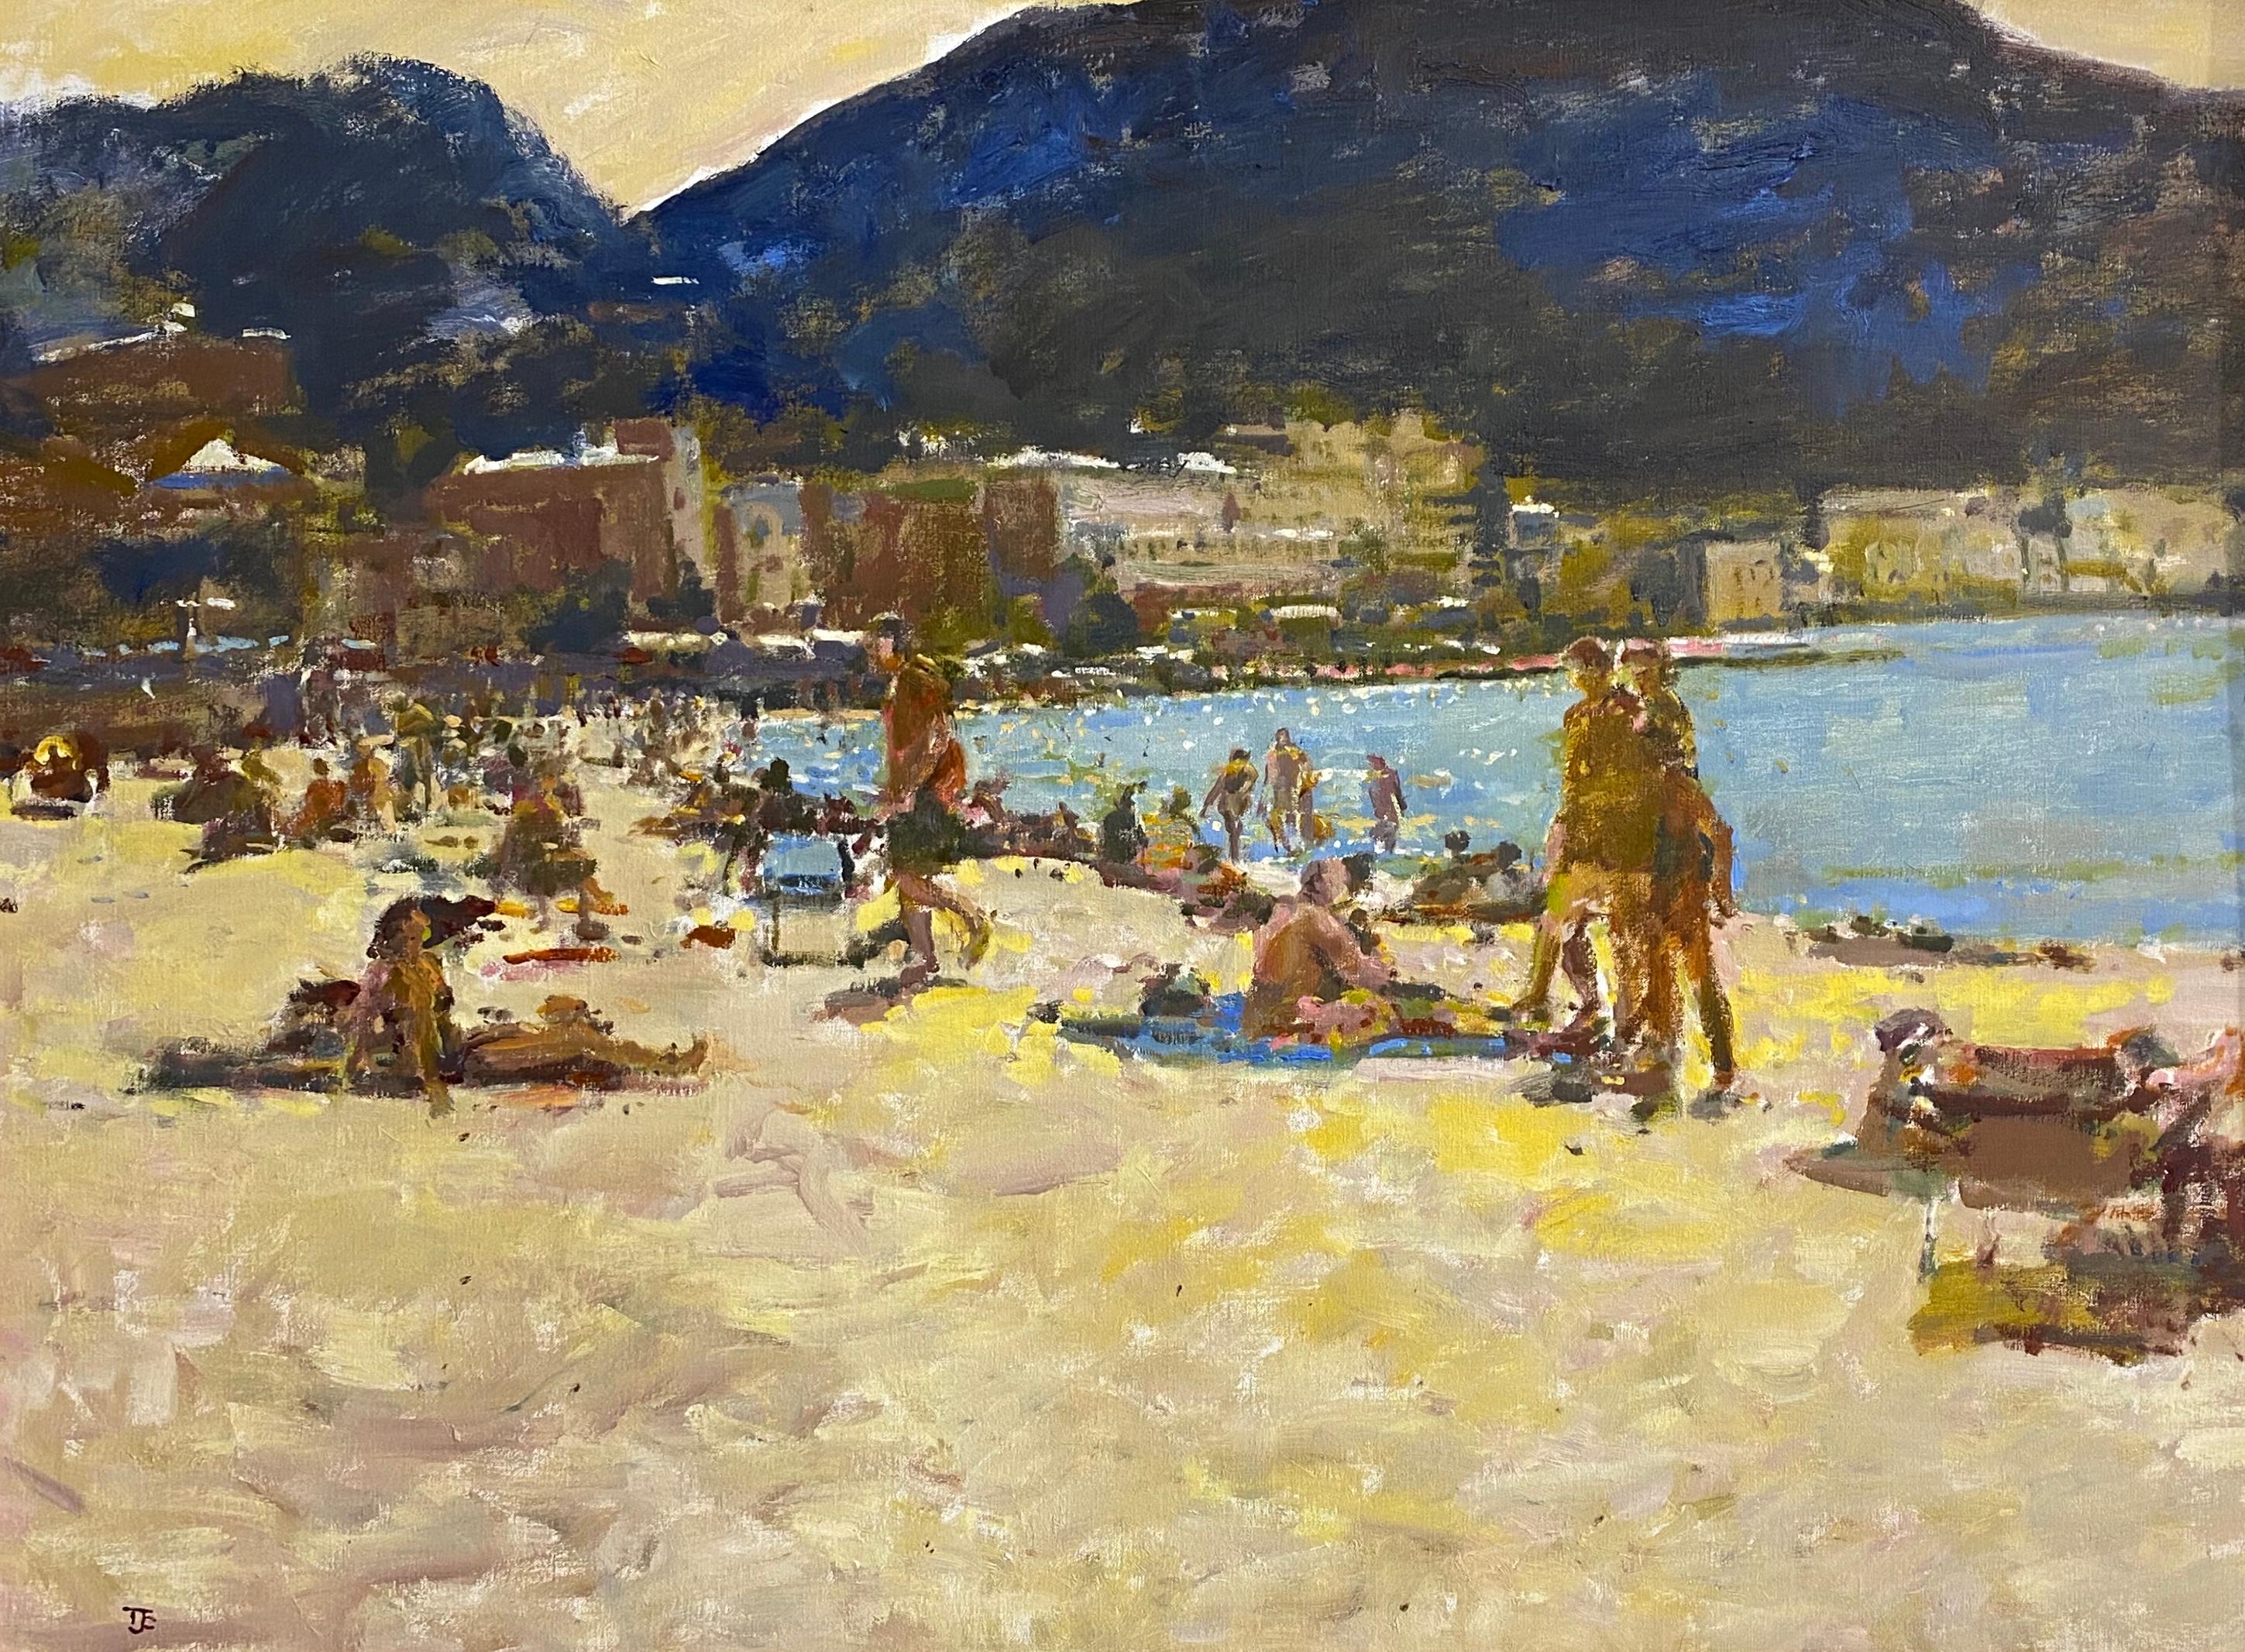 Tom Coates Figurative Painting - The beach, Port de Soller, Mallorca